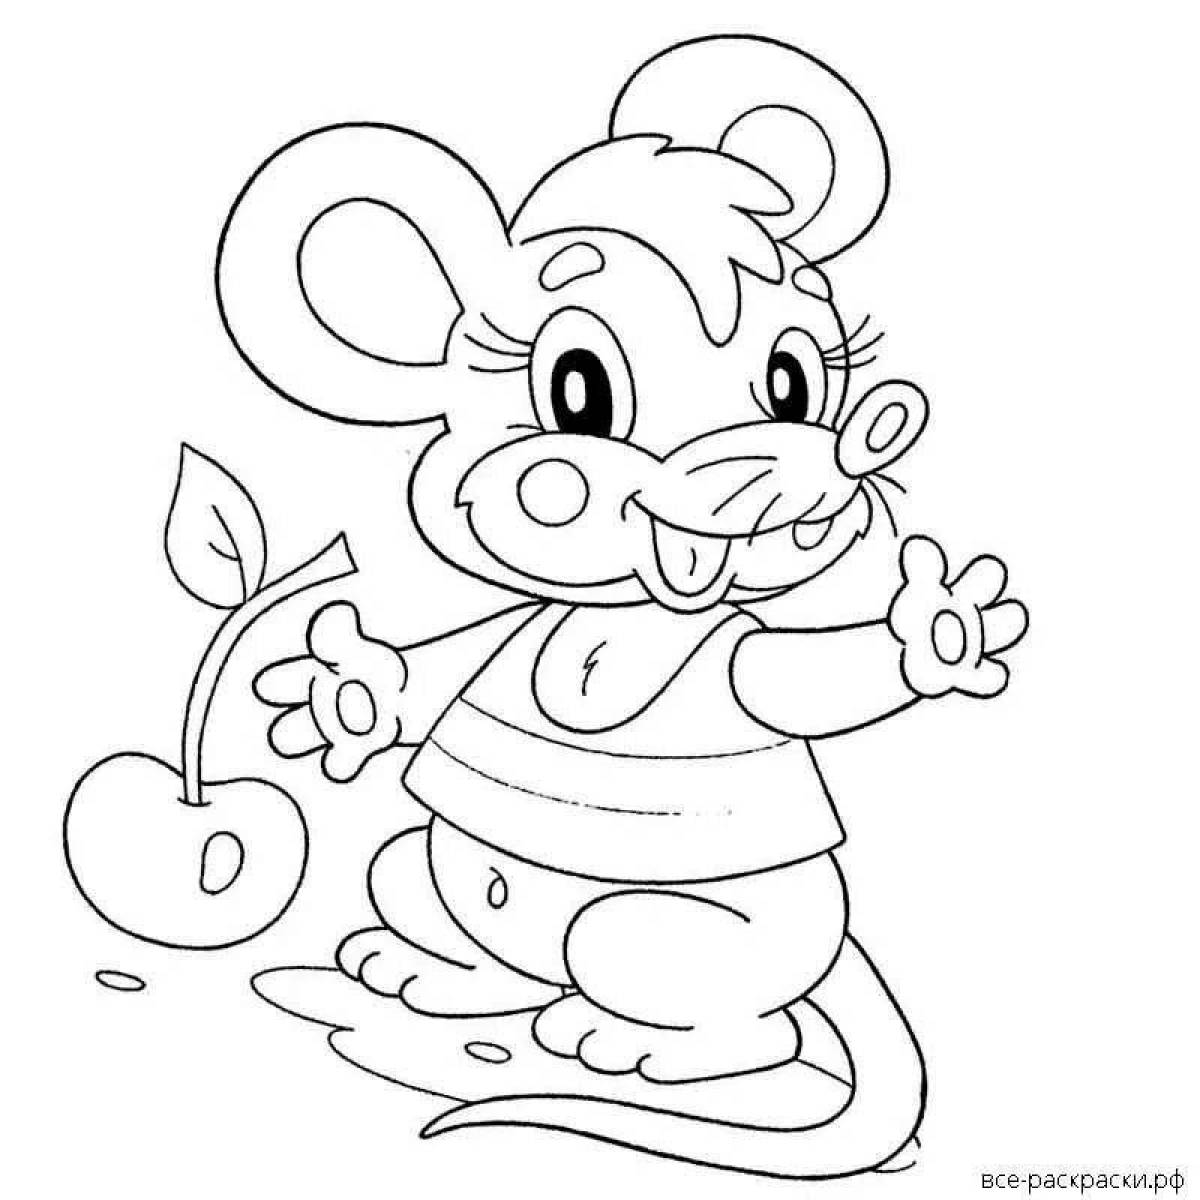 Color-happy mouse coloring page для детей 3-4 лет